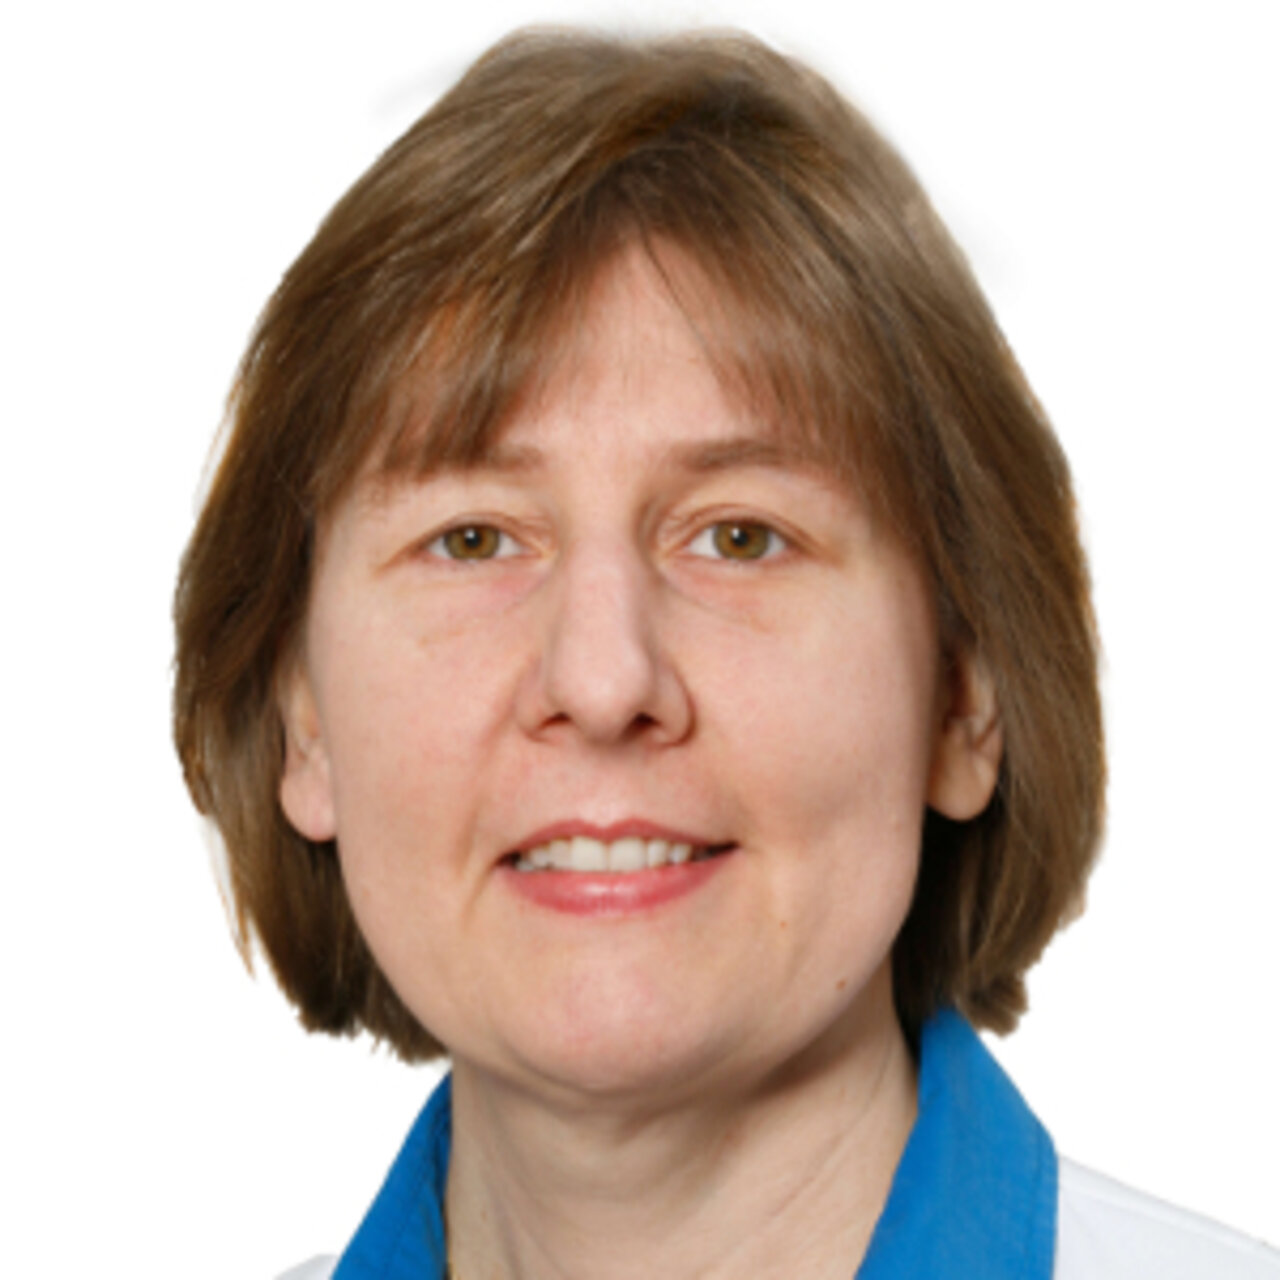 Prof. Dr. med. Tanja N. Fehm - Specialist in Gynecologic Oncology - Portrait